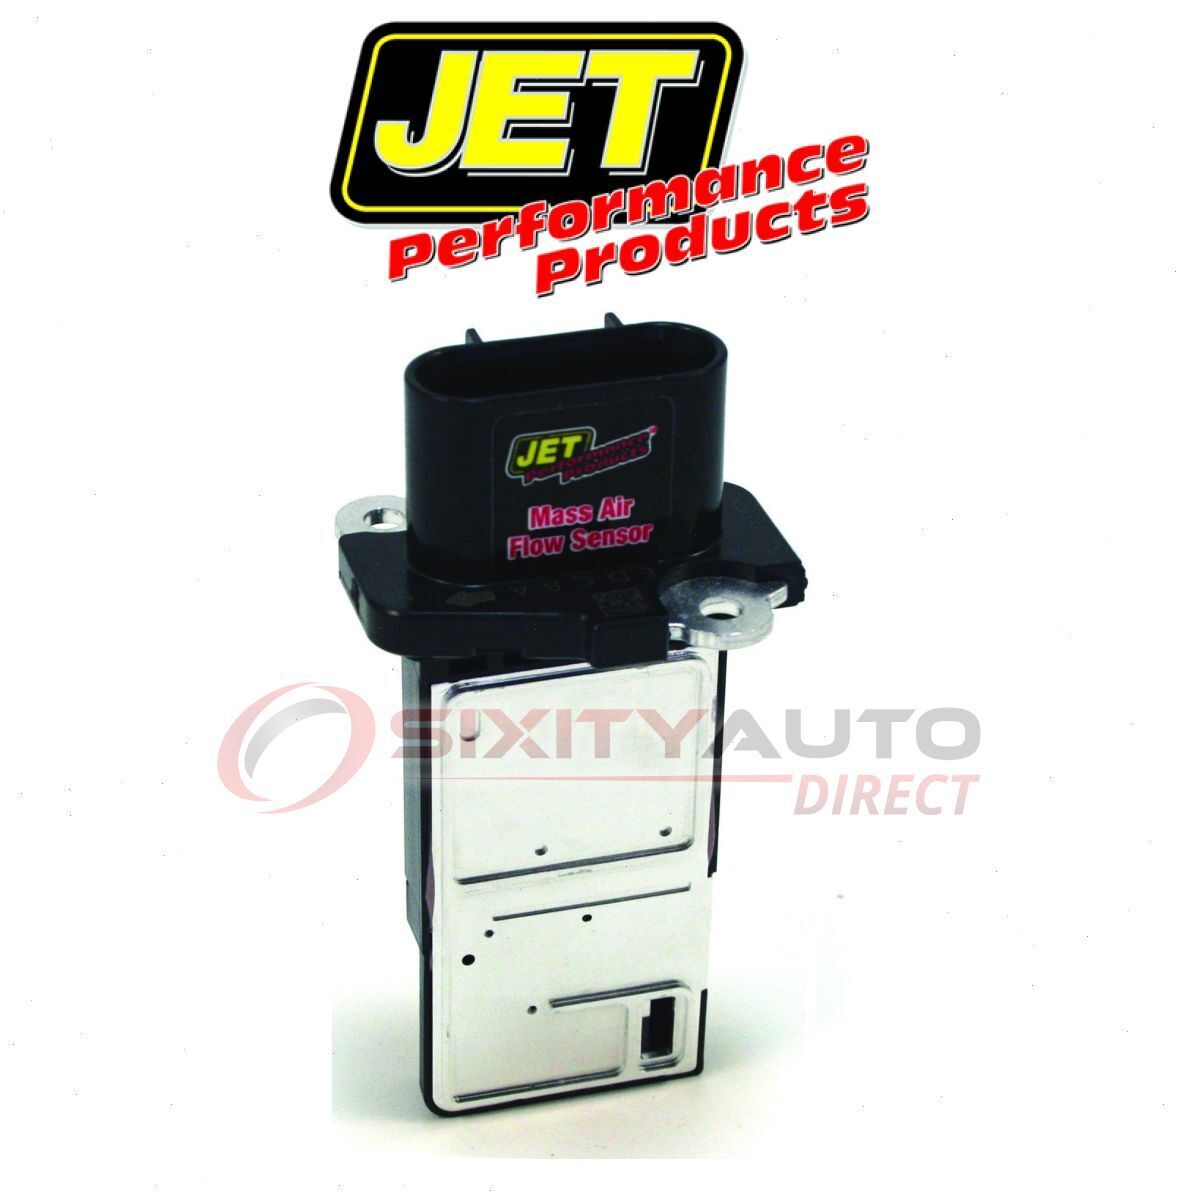 JET Mass Air Flow Sensor for 2007 Isuzu i-370 - Intake Emission Control jh